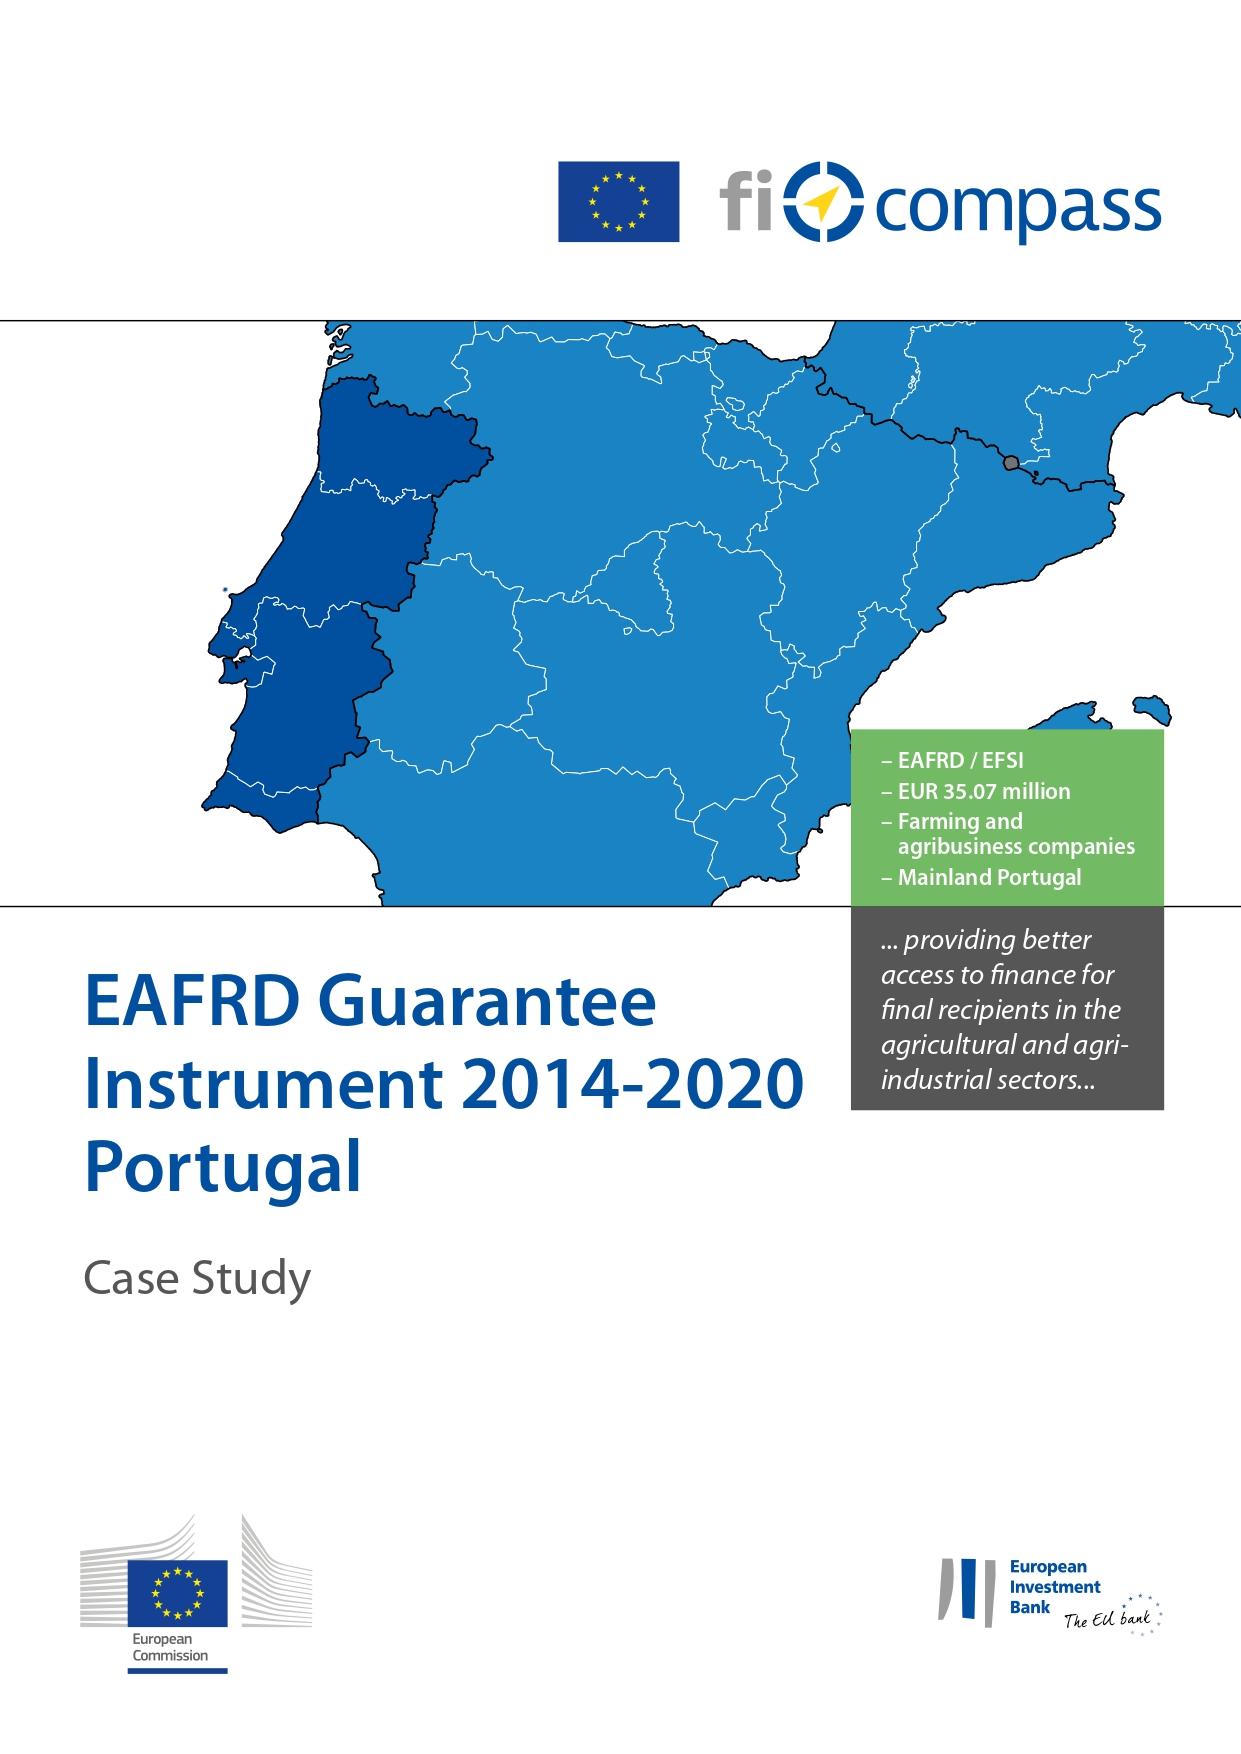 EAFRD Guarantee Instrument 2014-2020, Portugal